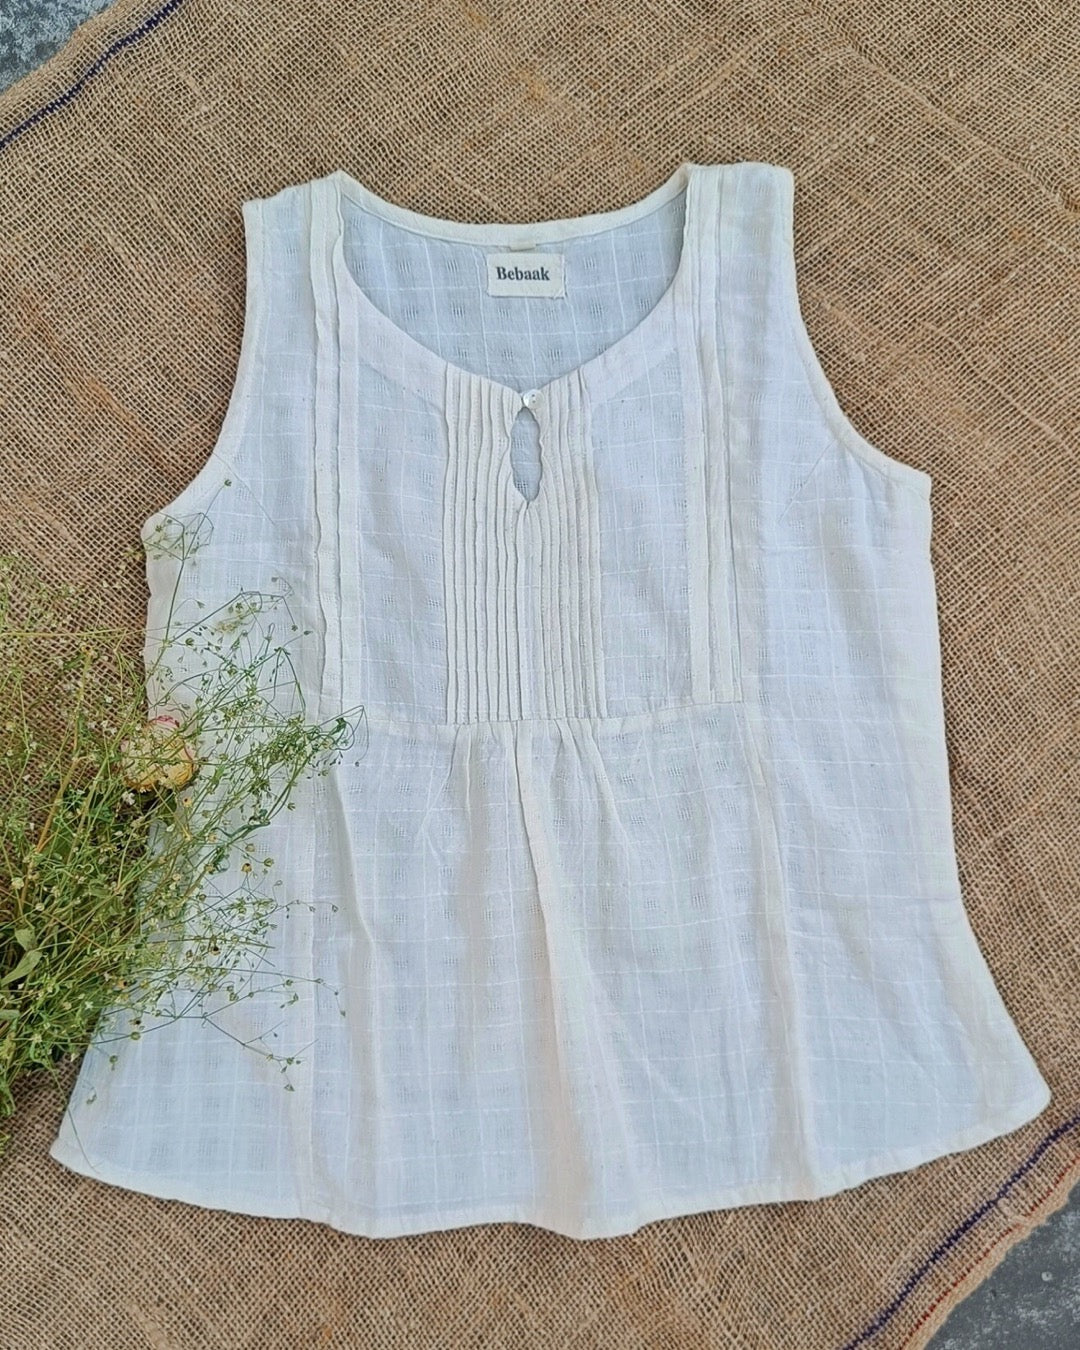 Off white sleeveless pure cotton top online at bebaakstudio.com